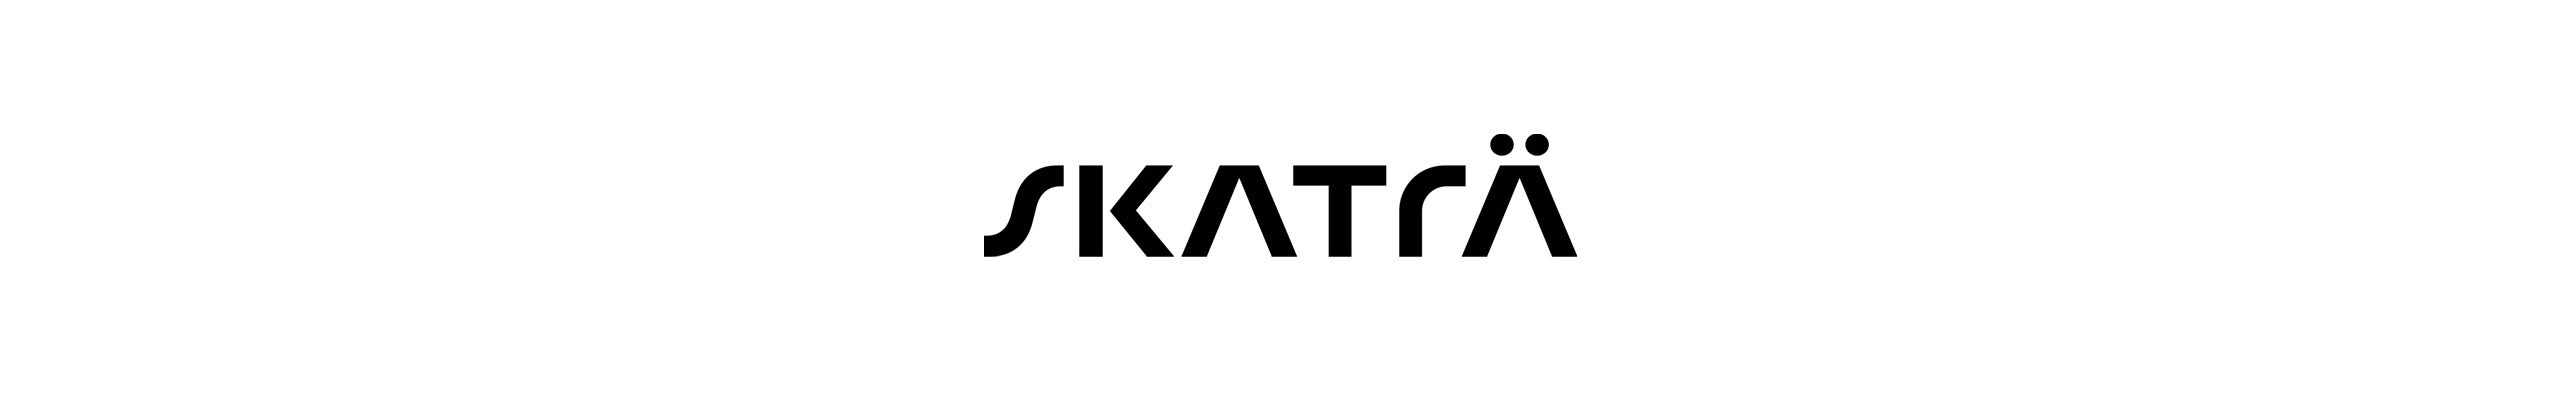 Skaträ Architects's profile banner